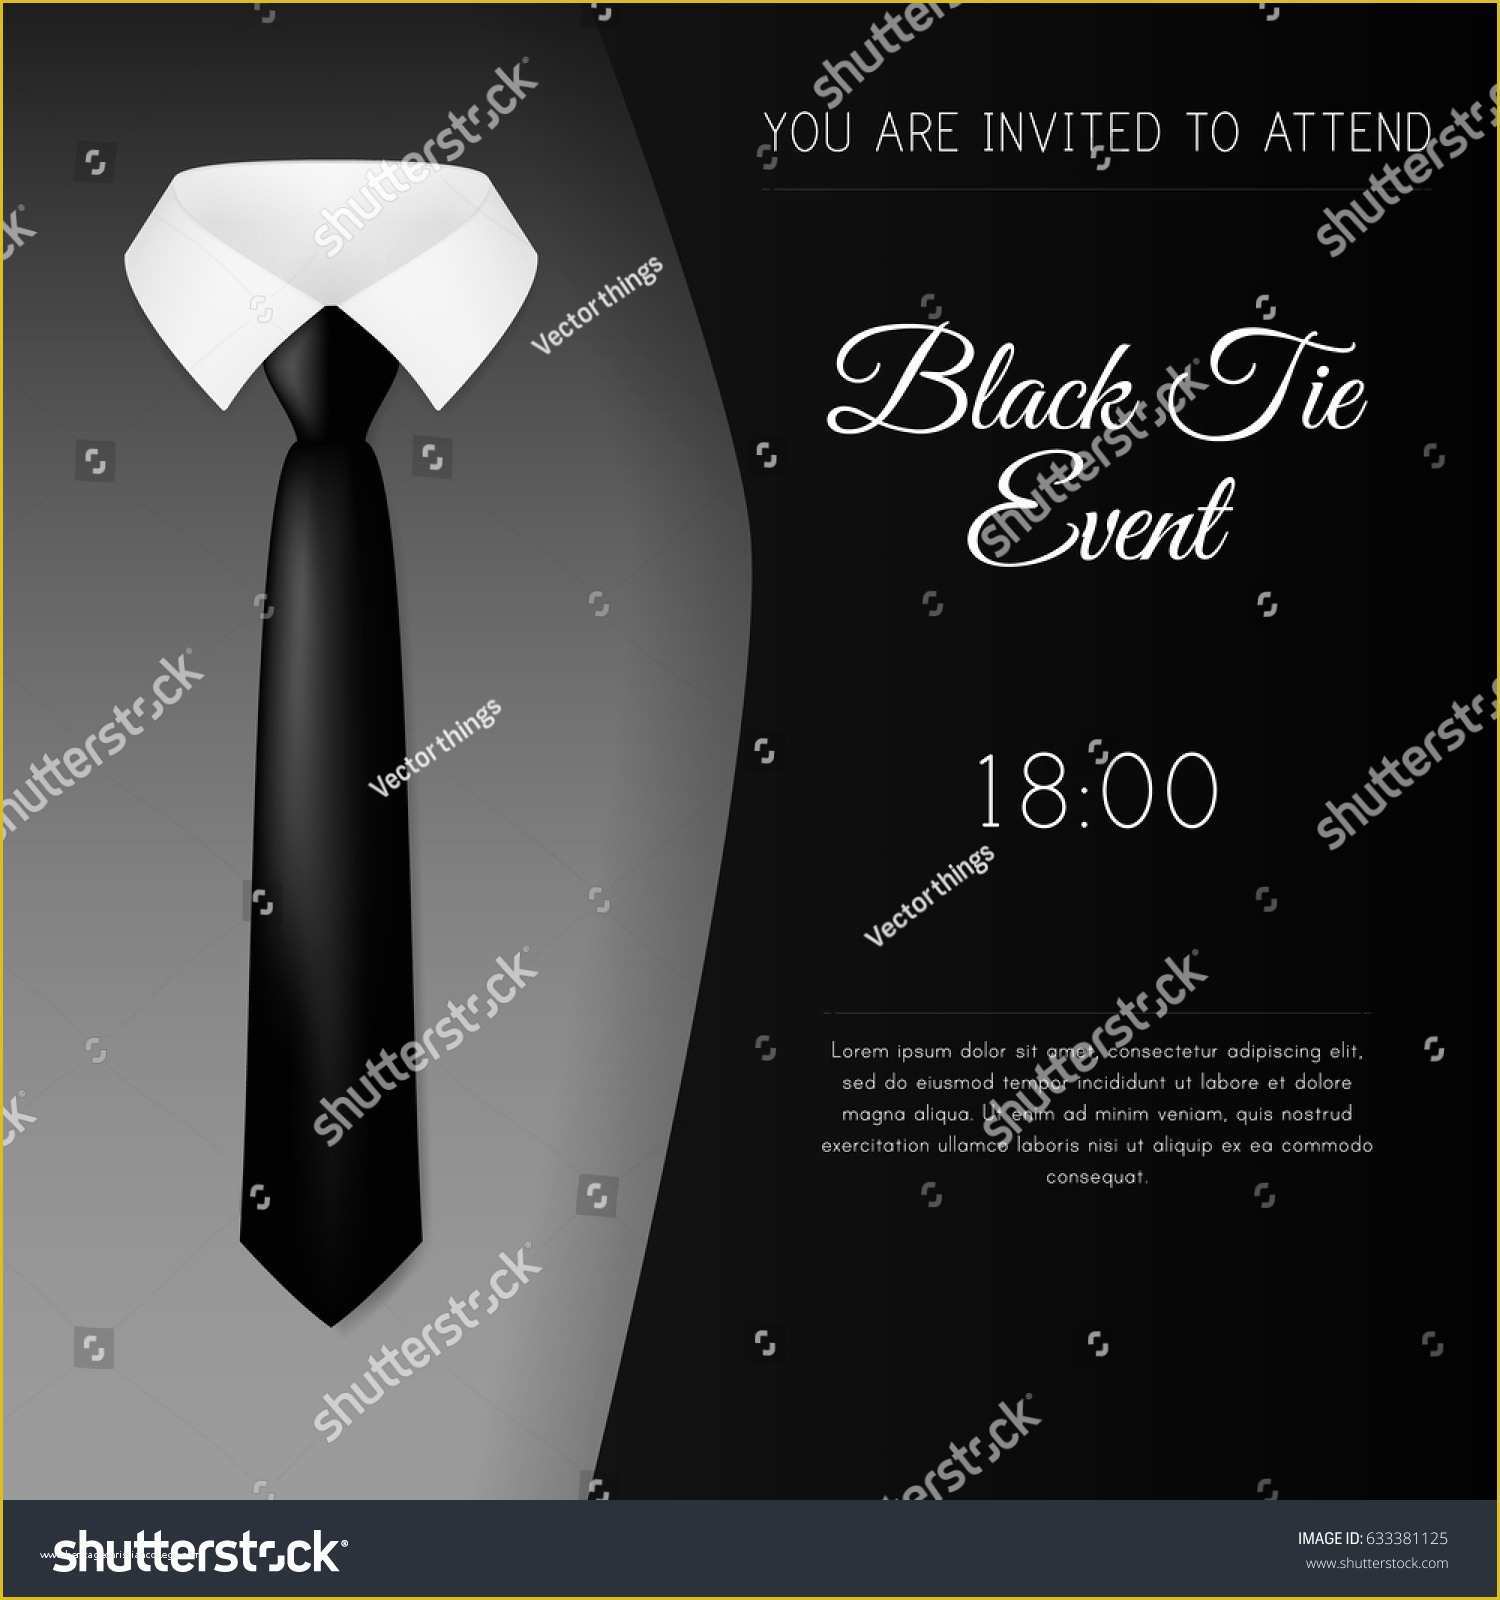 Black Tie event Invitation Free Template Of Elegant Black Tie event Invitation Template Stock Vector